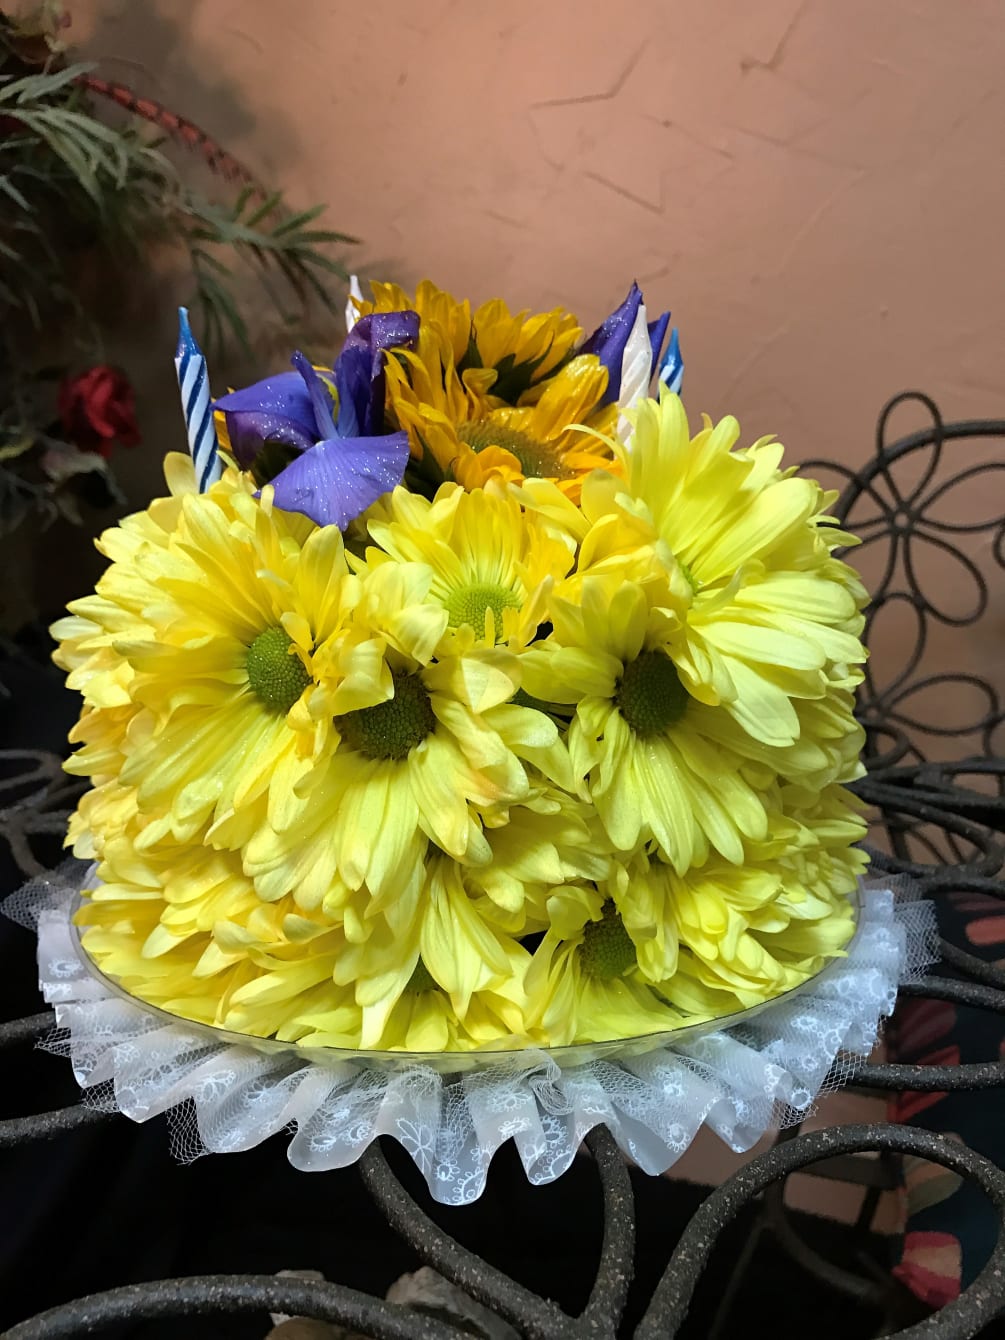 Happy Birthday cake made with fresh flowers!  Sure to make someone